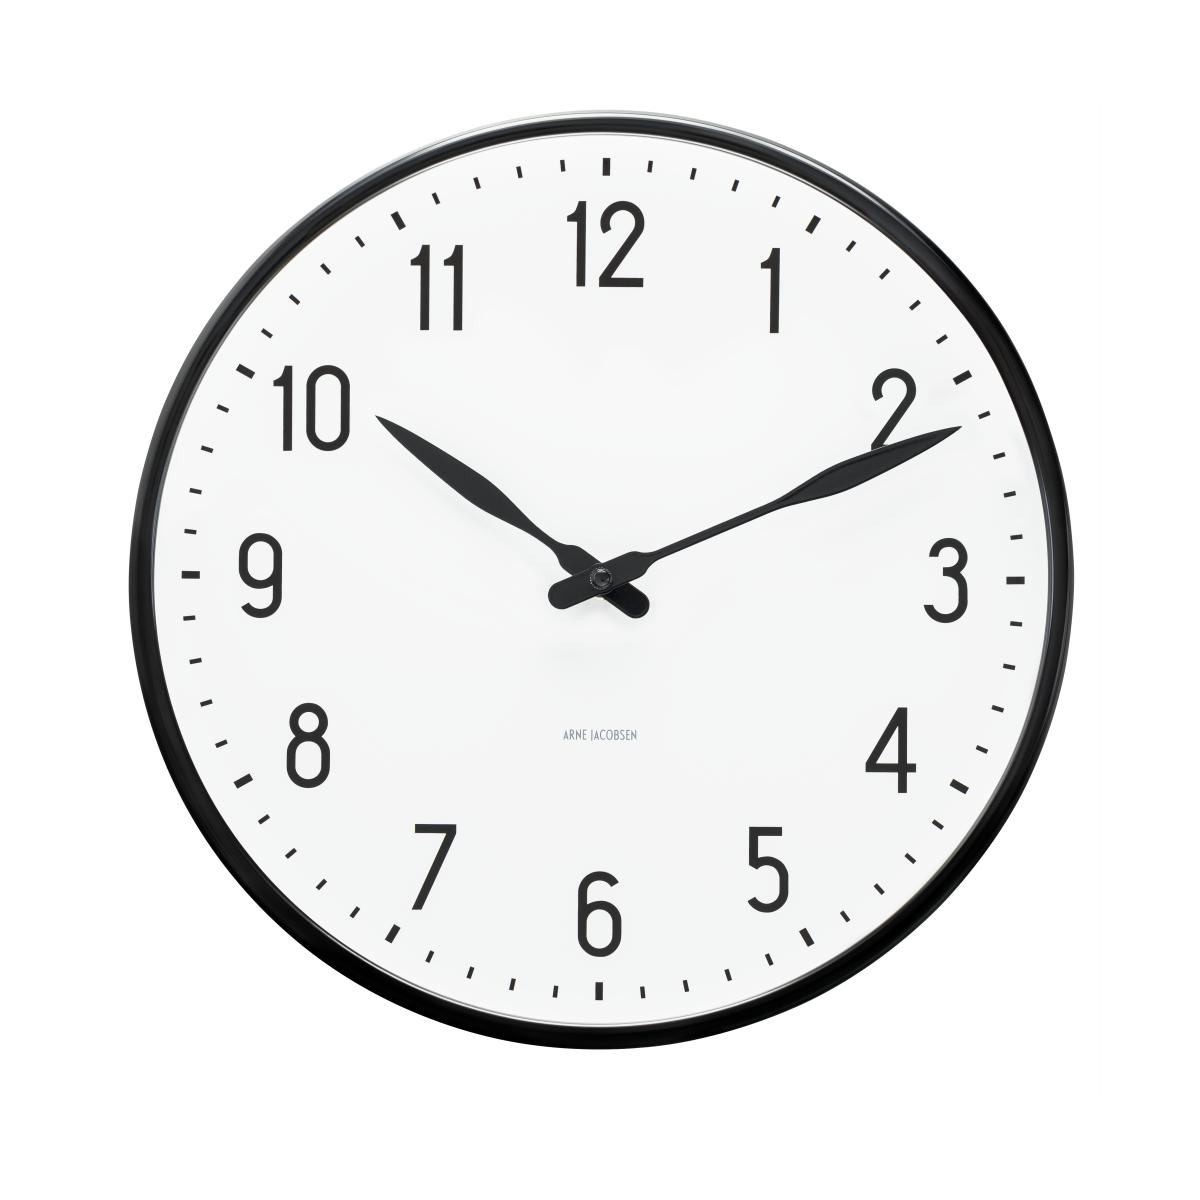 Arne Jacobsen Station Wall Clock, 29cm